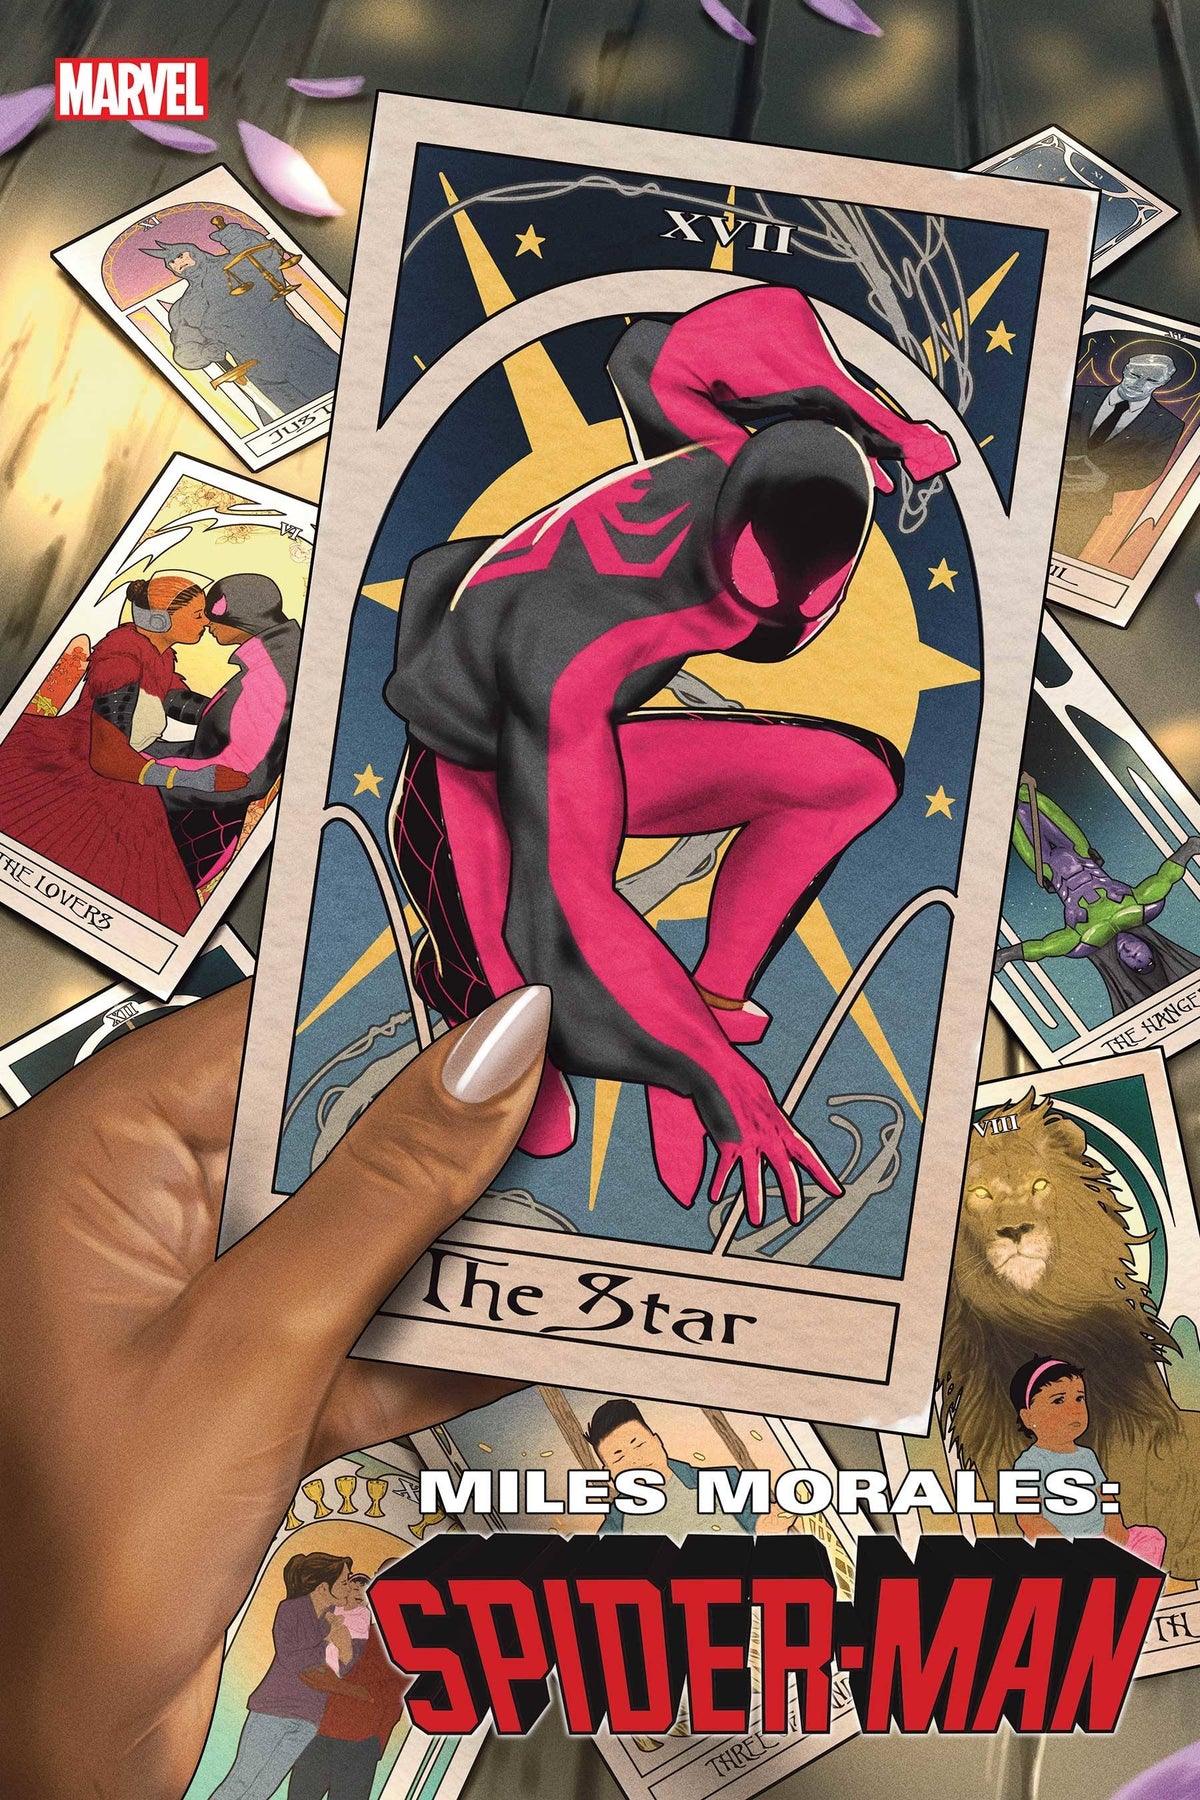 Miles Morales Spider-Man #42 - State of Comics